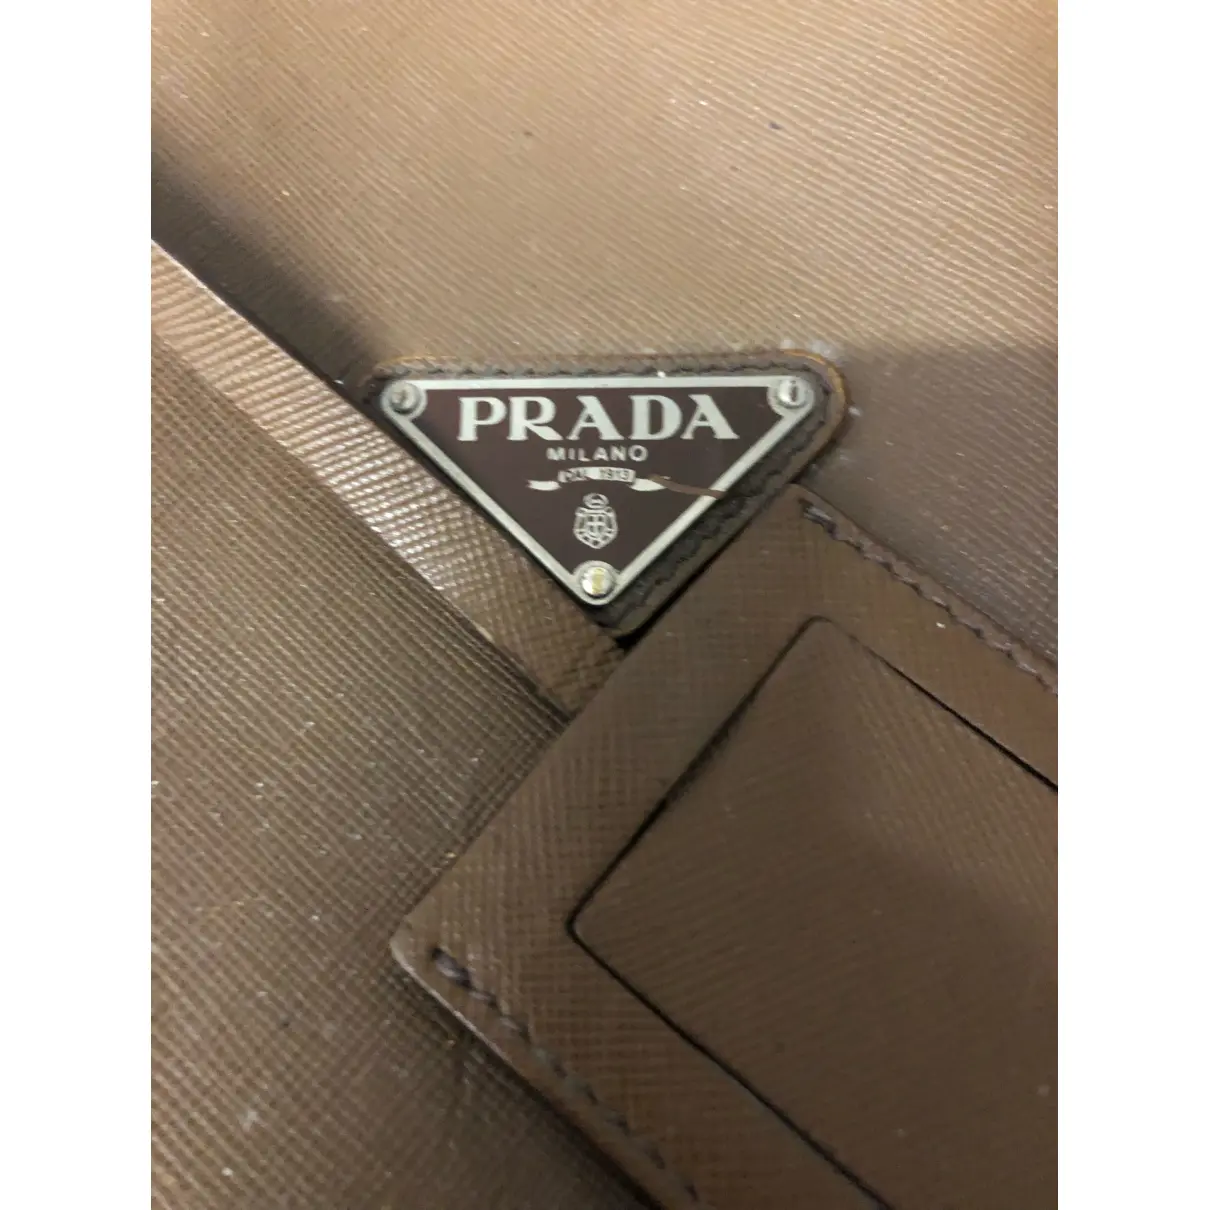 Buy Prada Leather travel bag online - Vintage